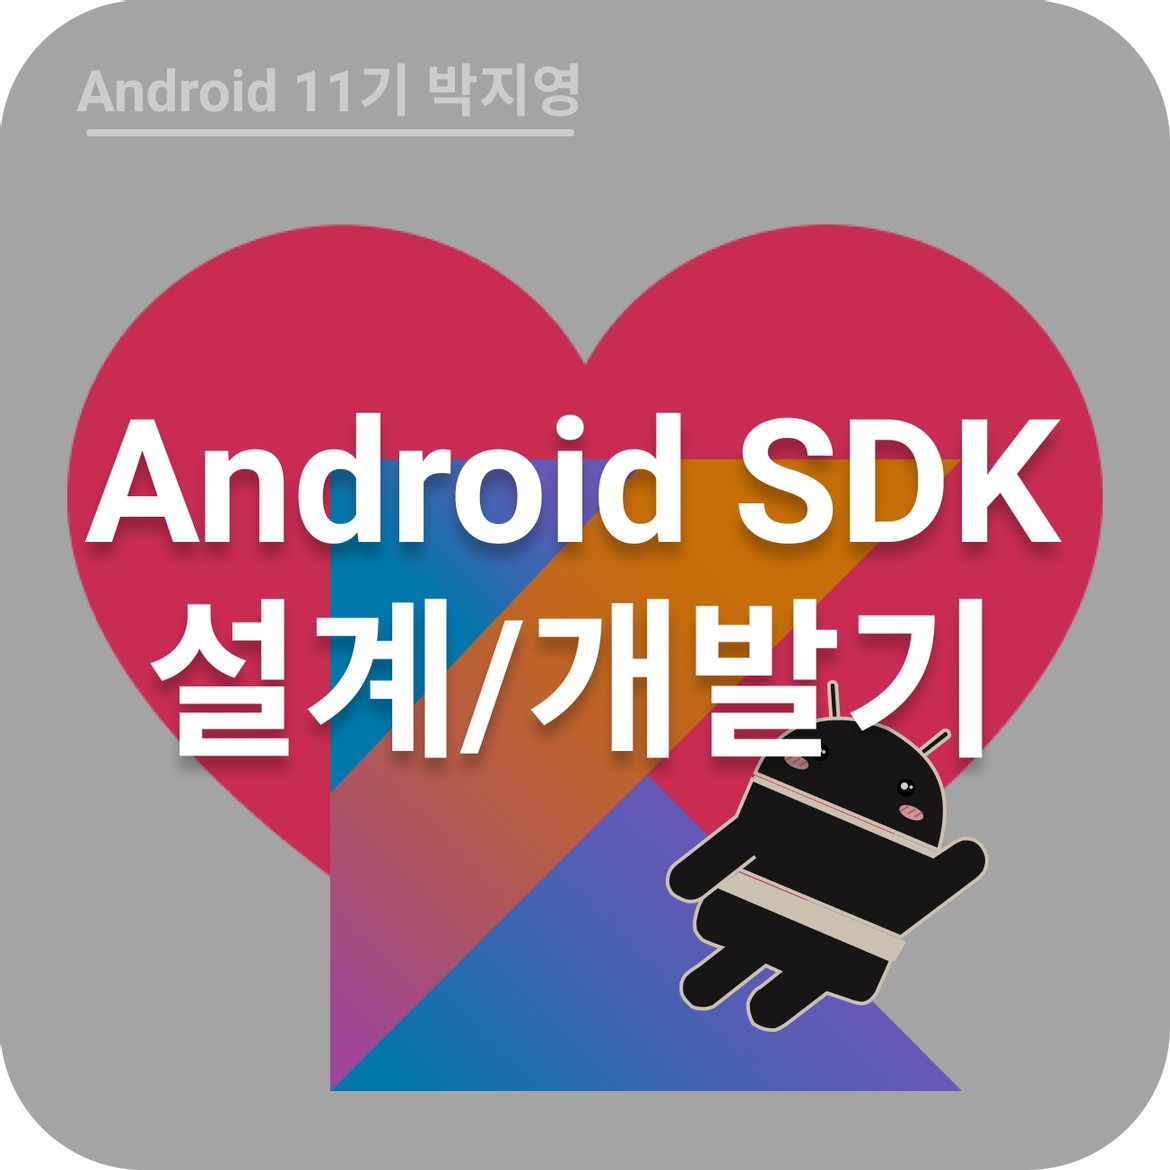 [Android] SDK를 어떻게 설계하고 개발했는가